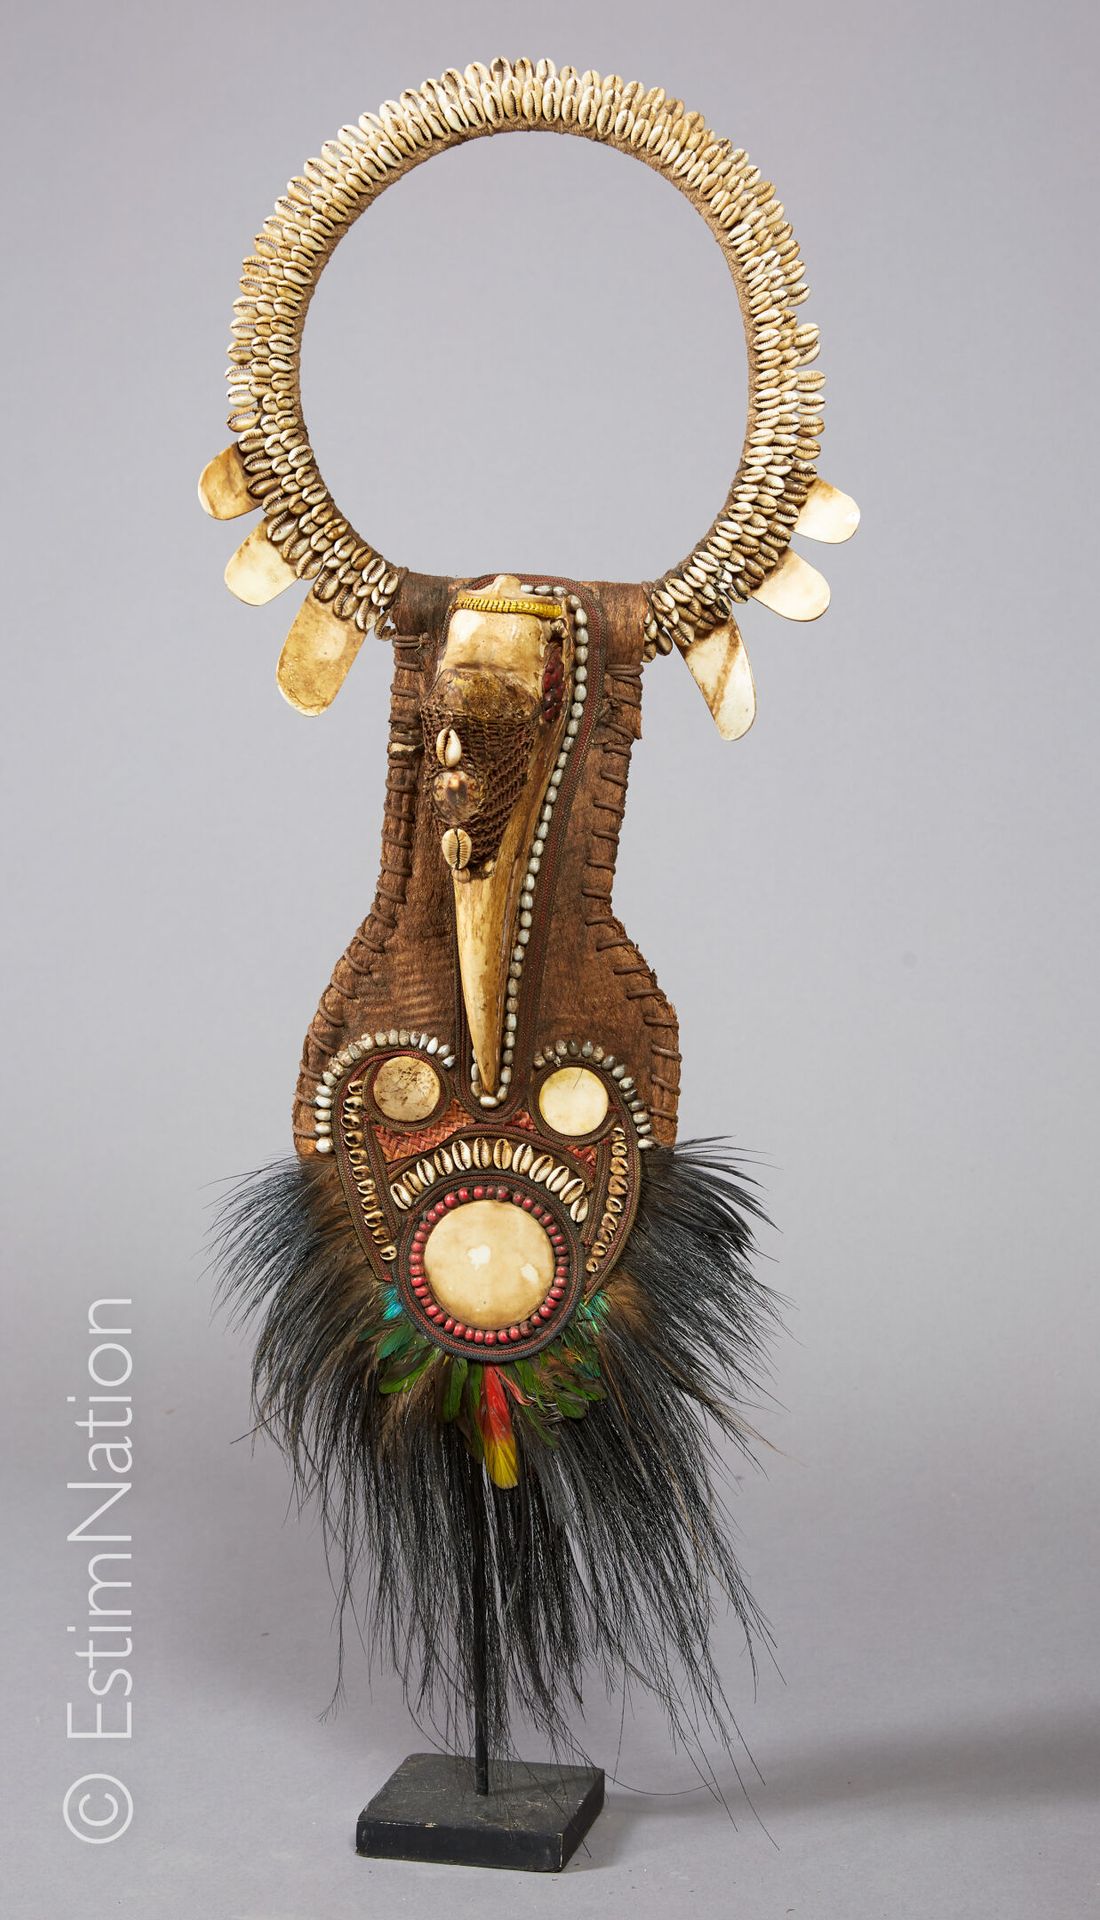 ASMAT - IRIAN JAYA 阿斯玛特-伊里安-贾亚



用植物树皮制成的胸饰项链，上面装饰着咖啡豆壳和骨条组成的三层皇冠。中间是一个用编织绳、篮子、&hellip;